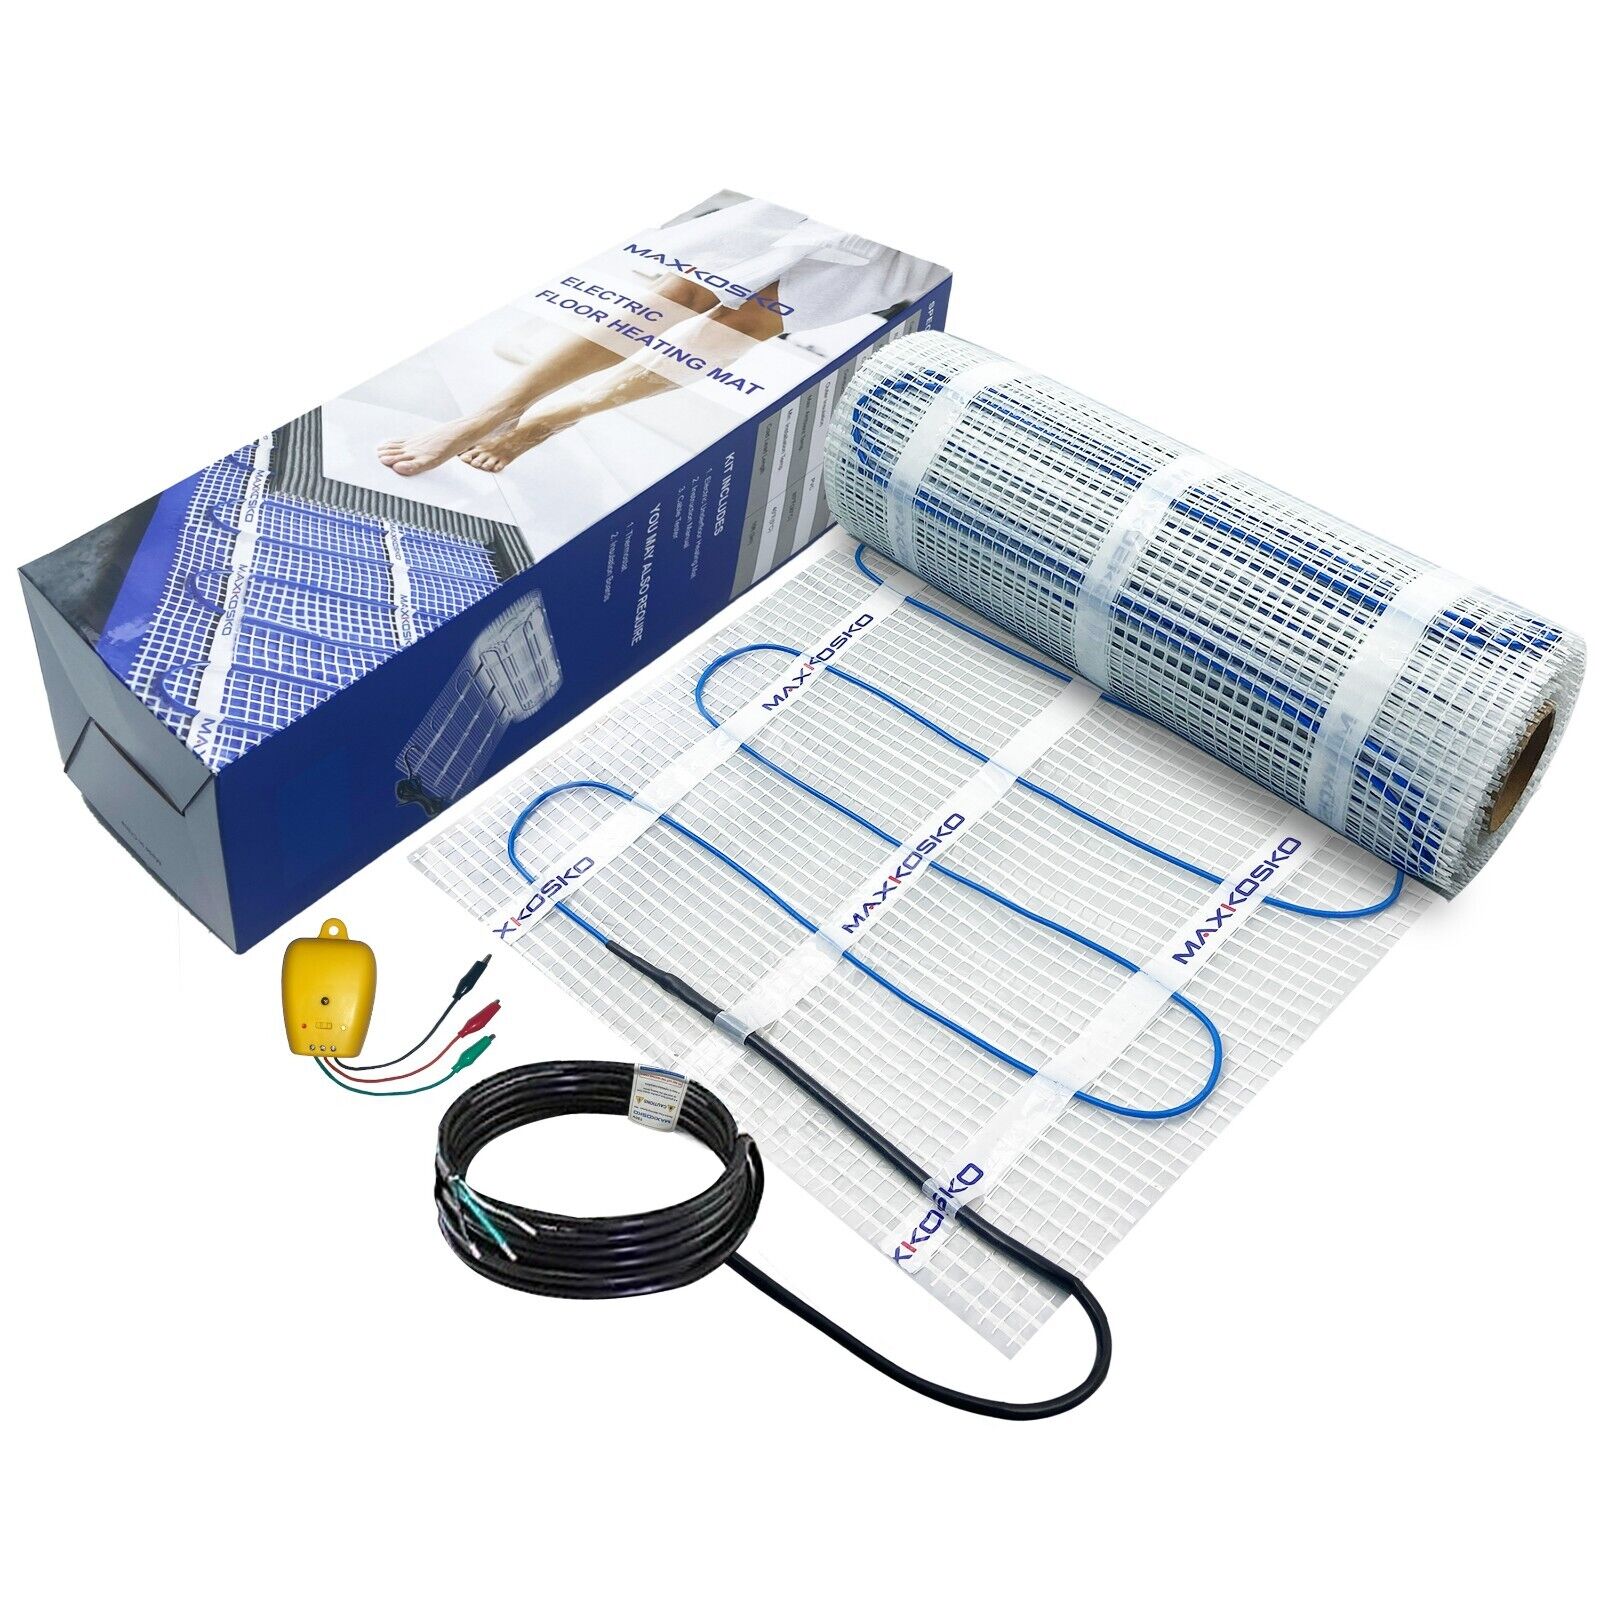 MAXKOSKO Electric Floor Heat Mat Kit, 120V Underfloor Radiant Heating System